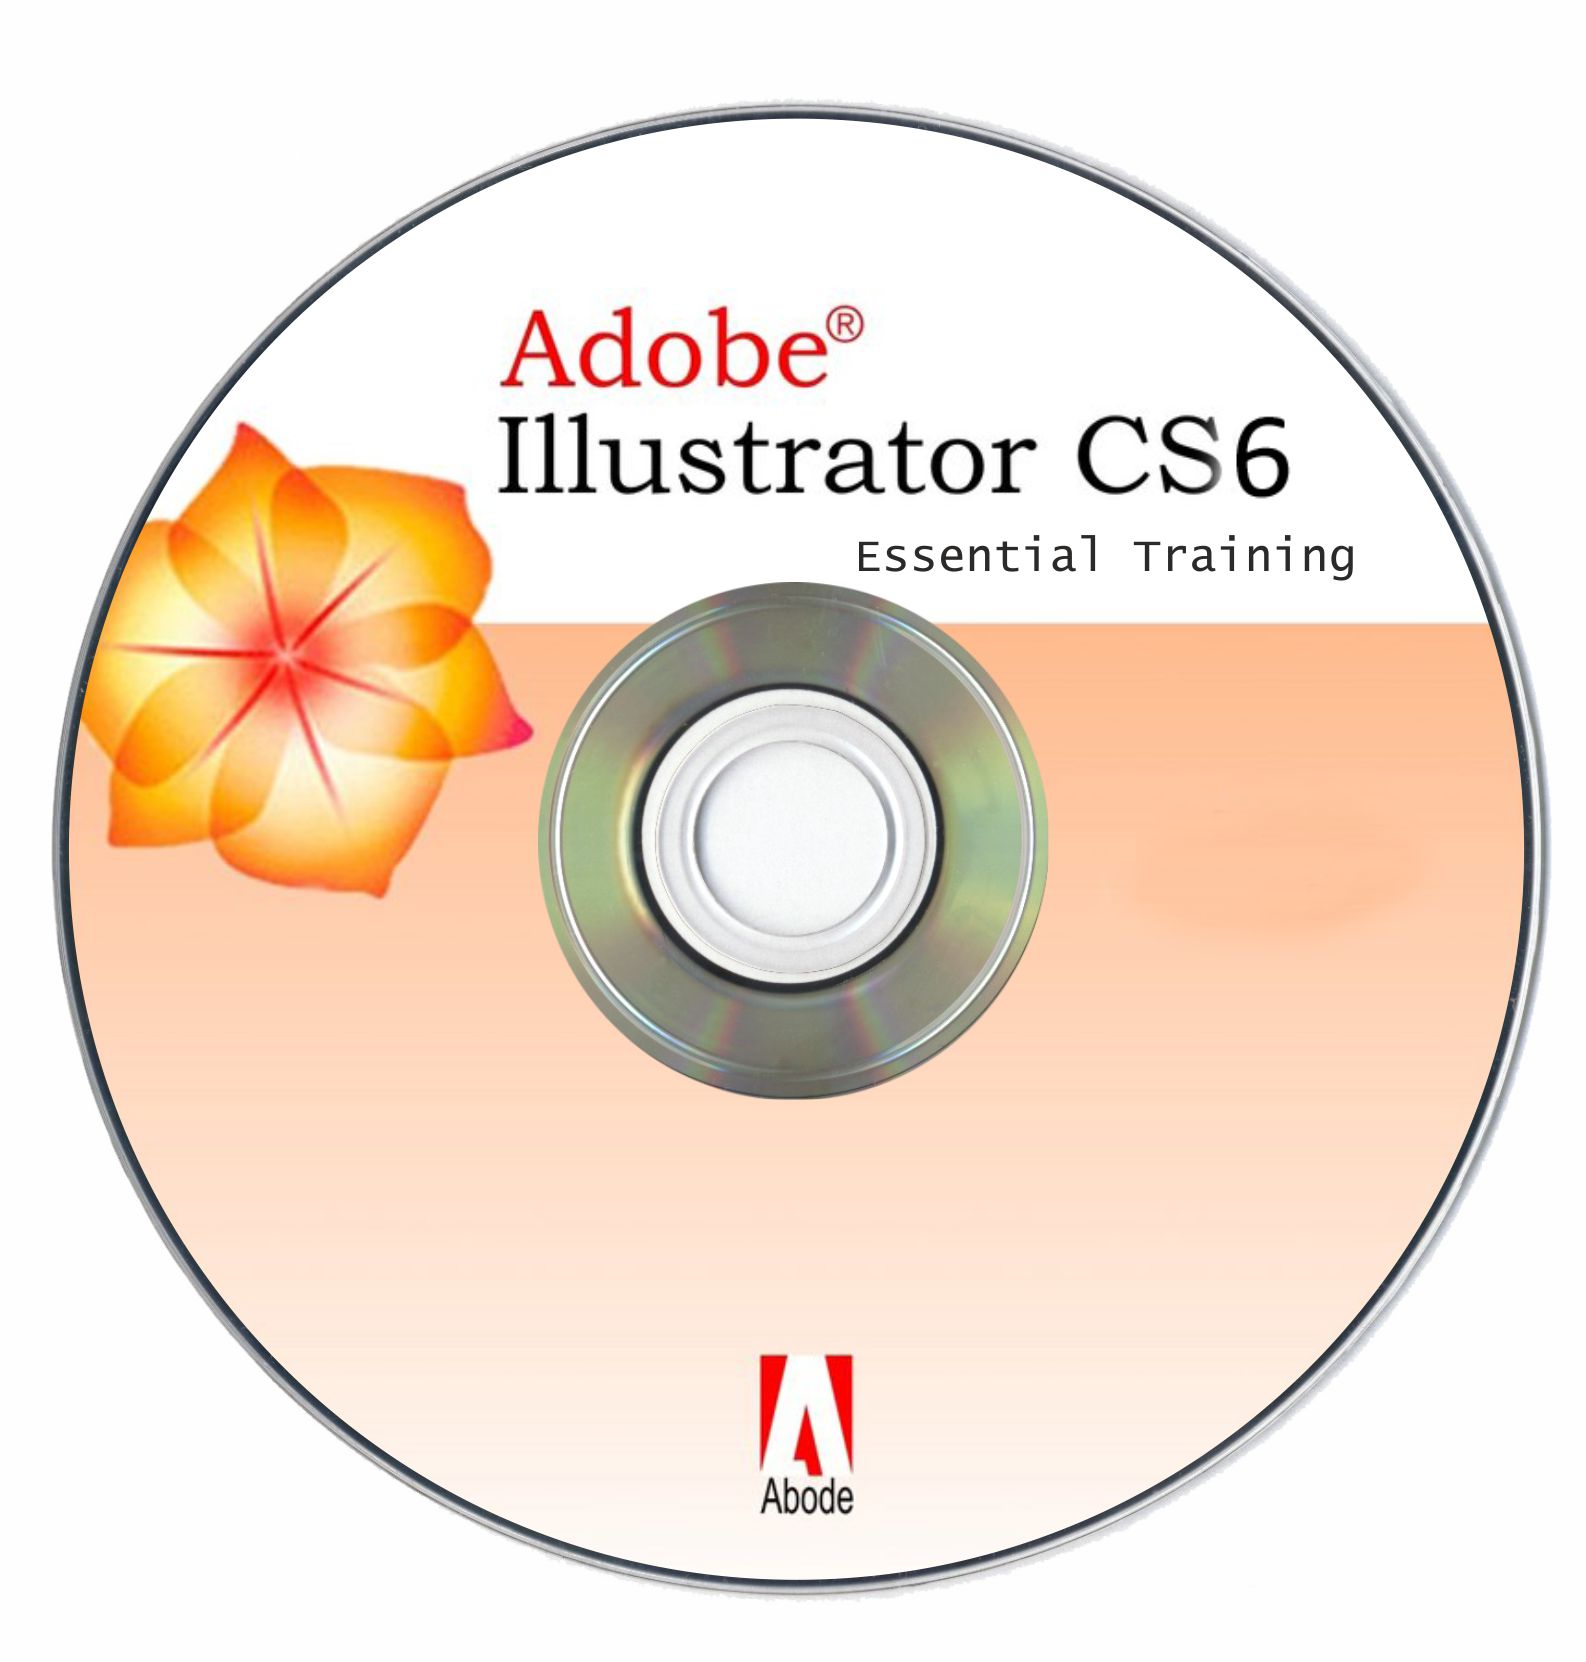 Adobe premiere pro cs6 dslr sequence presets downloads